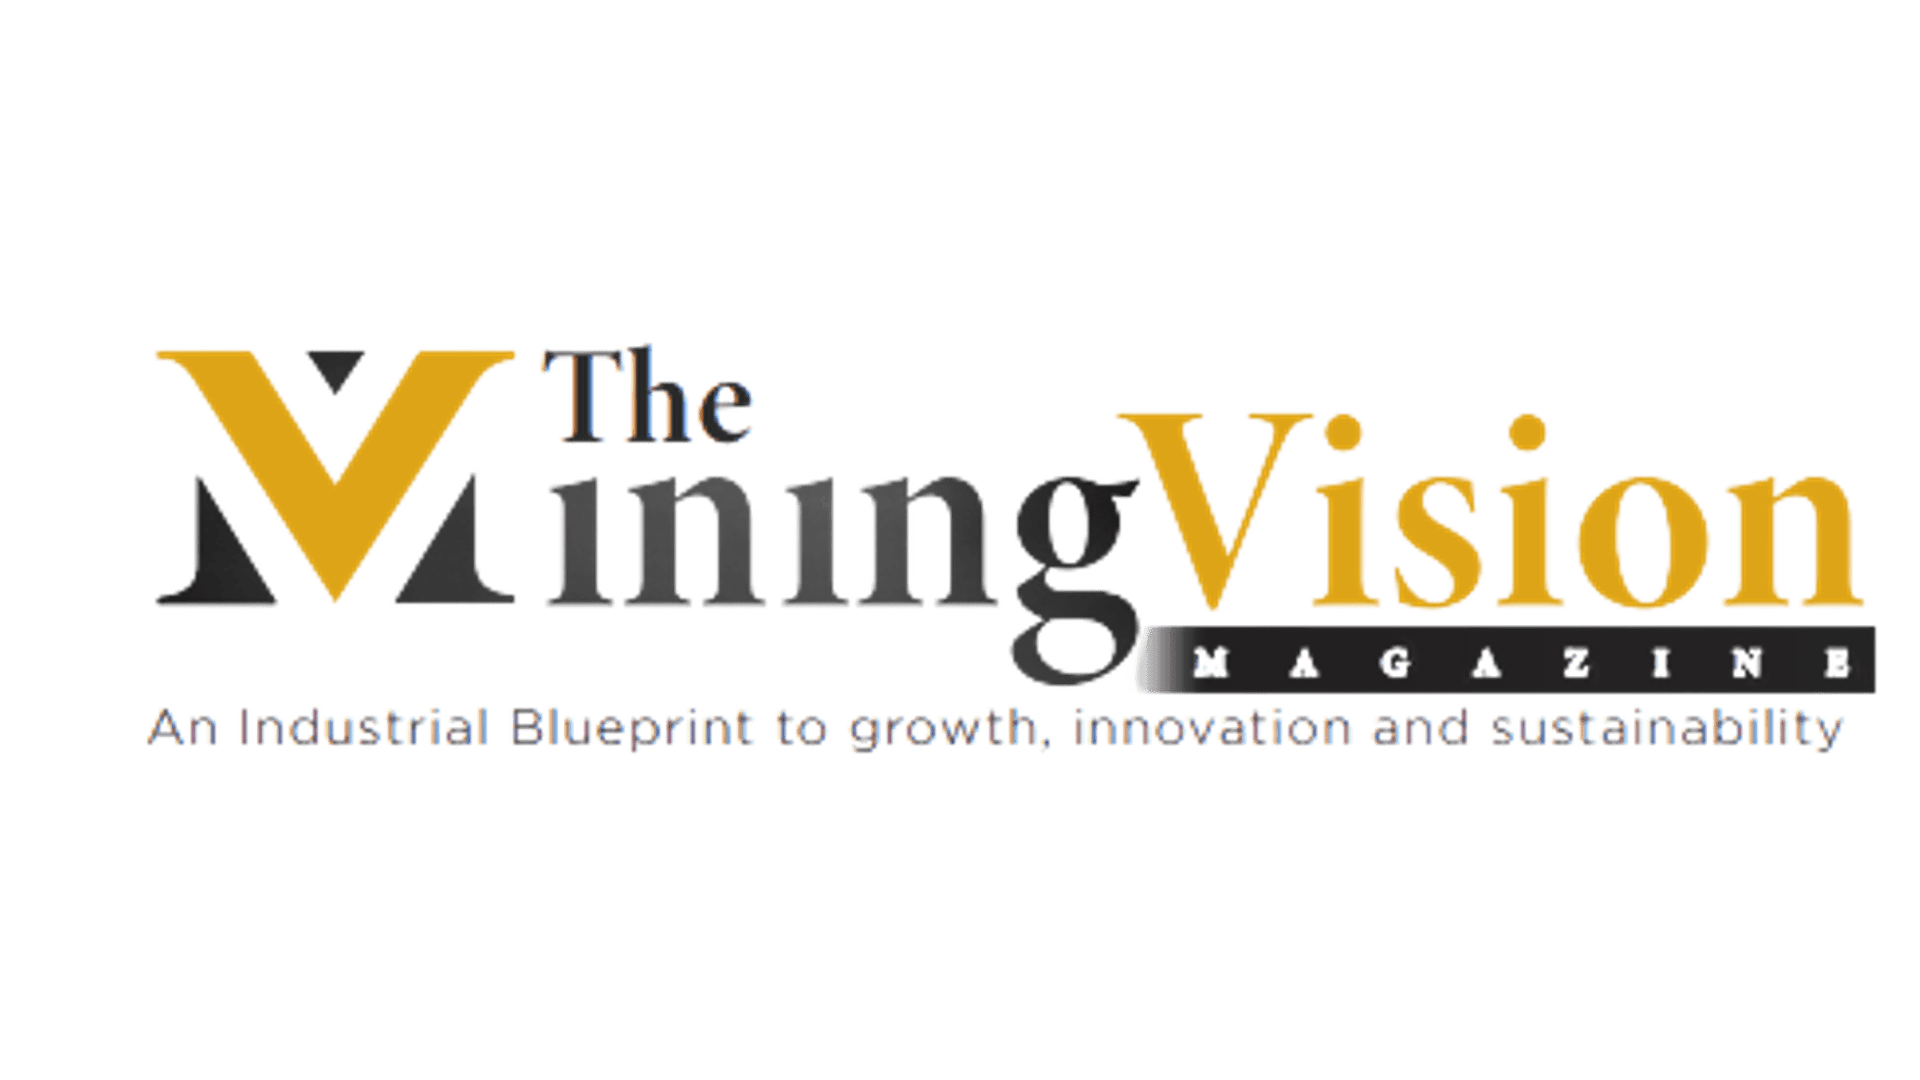 Mining vision magazine logo